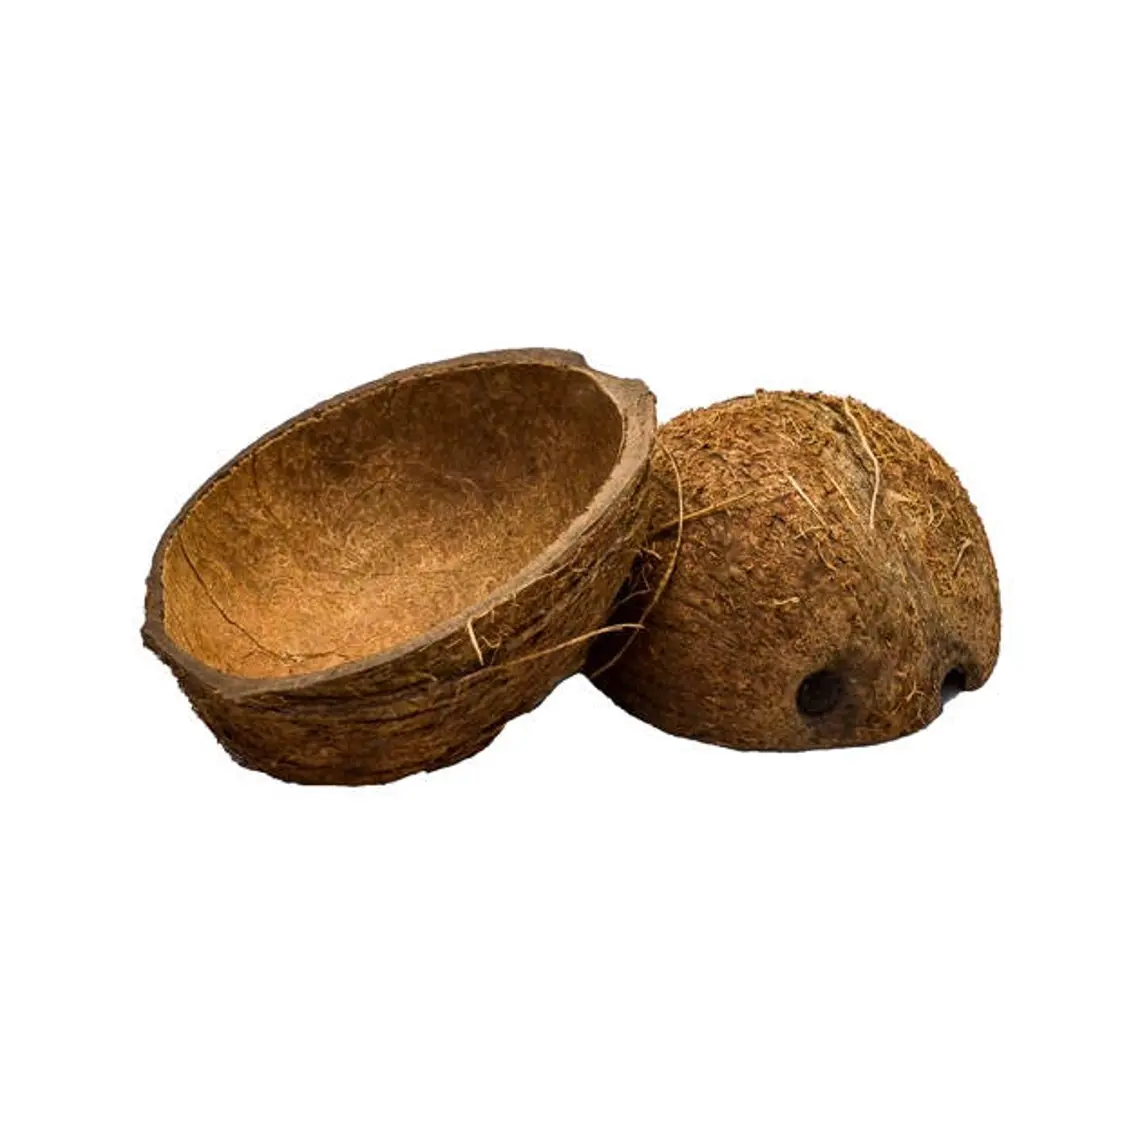 Halbierte Kokosnuss mit Öffnung